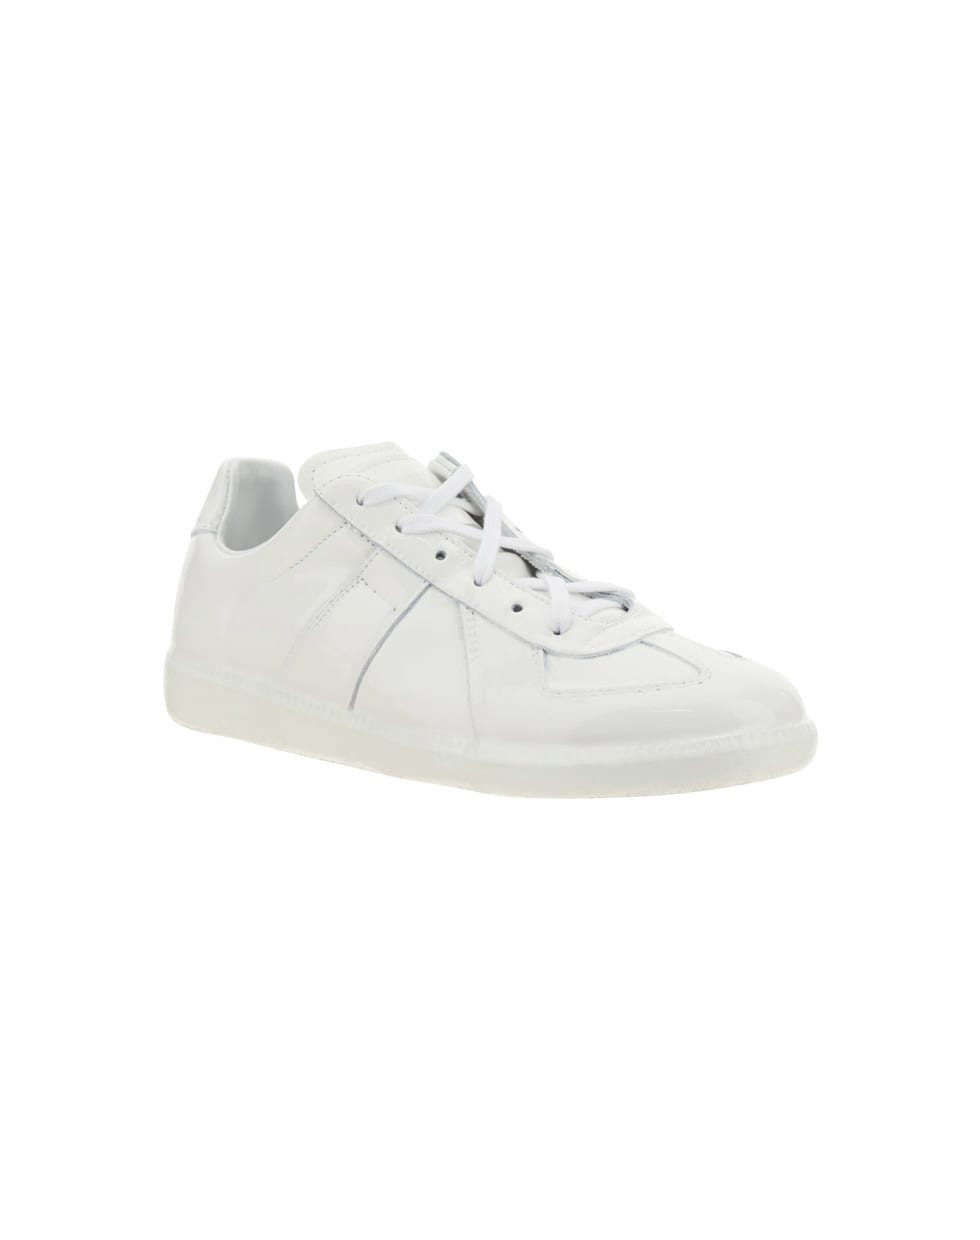 Maison Margiela Margiela Sneakers - Off white